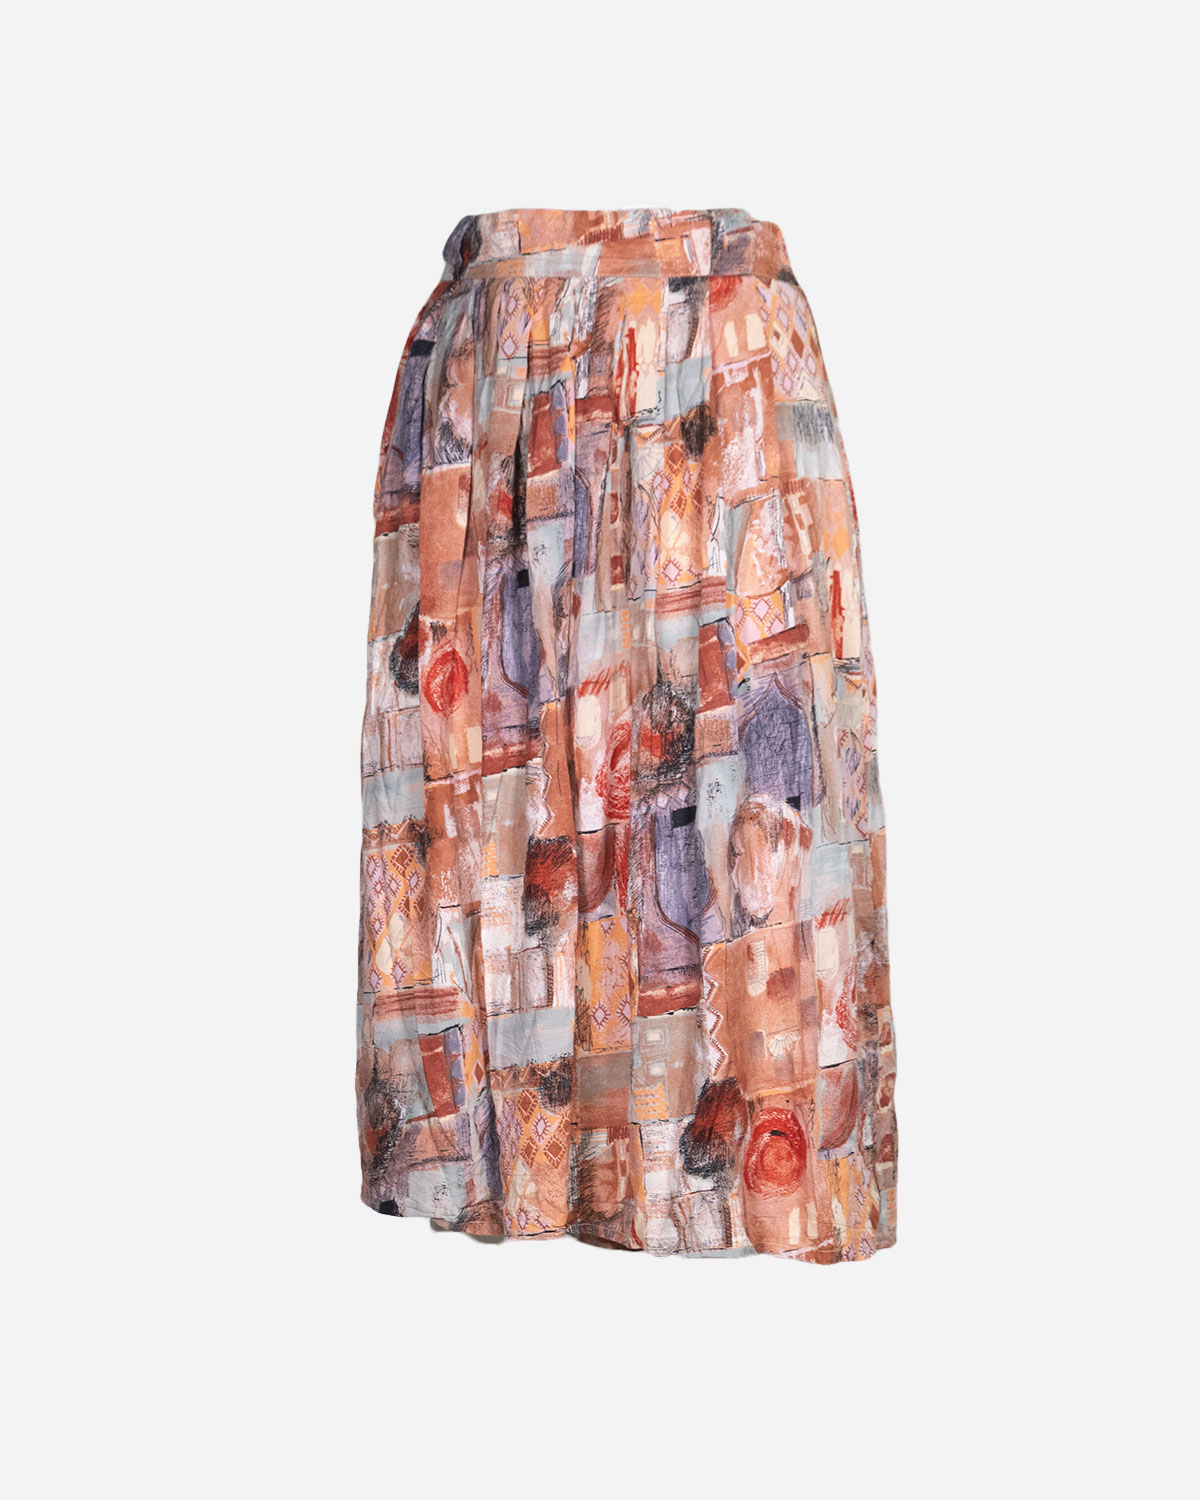 Vintage floral summer skirts: 4 pieces